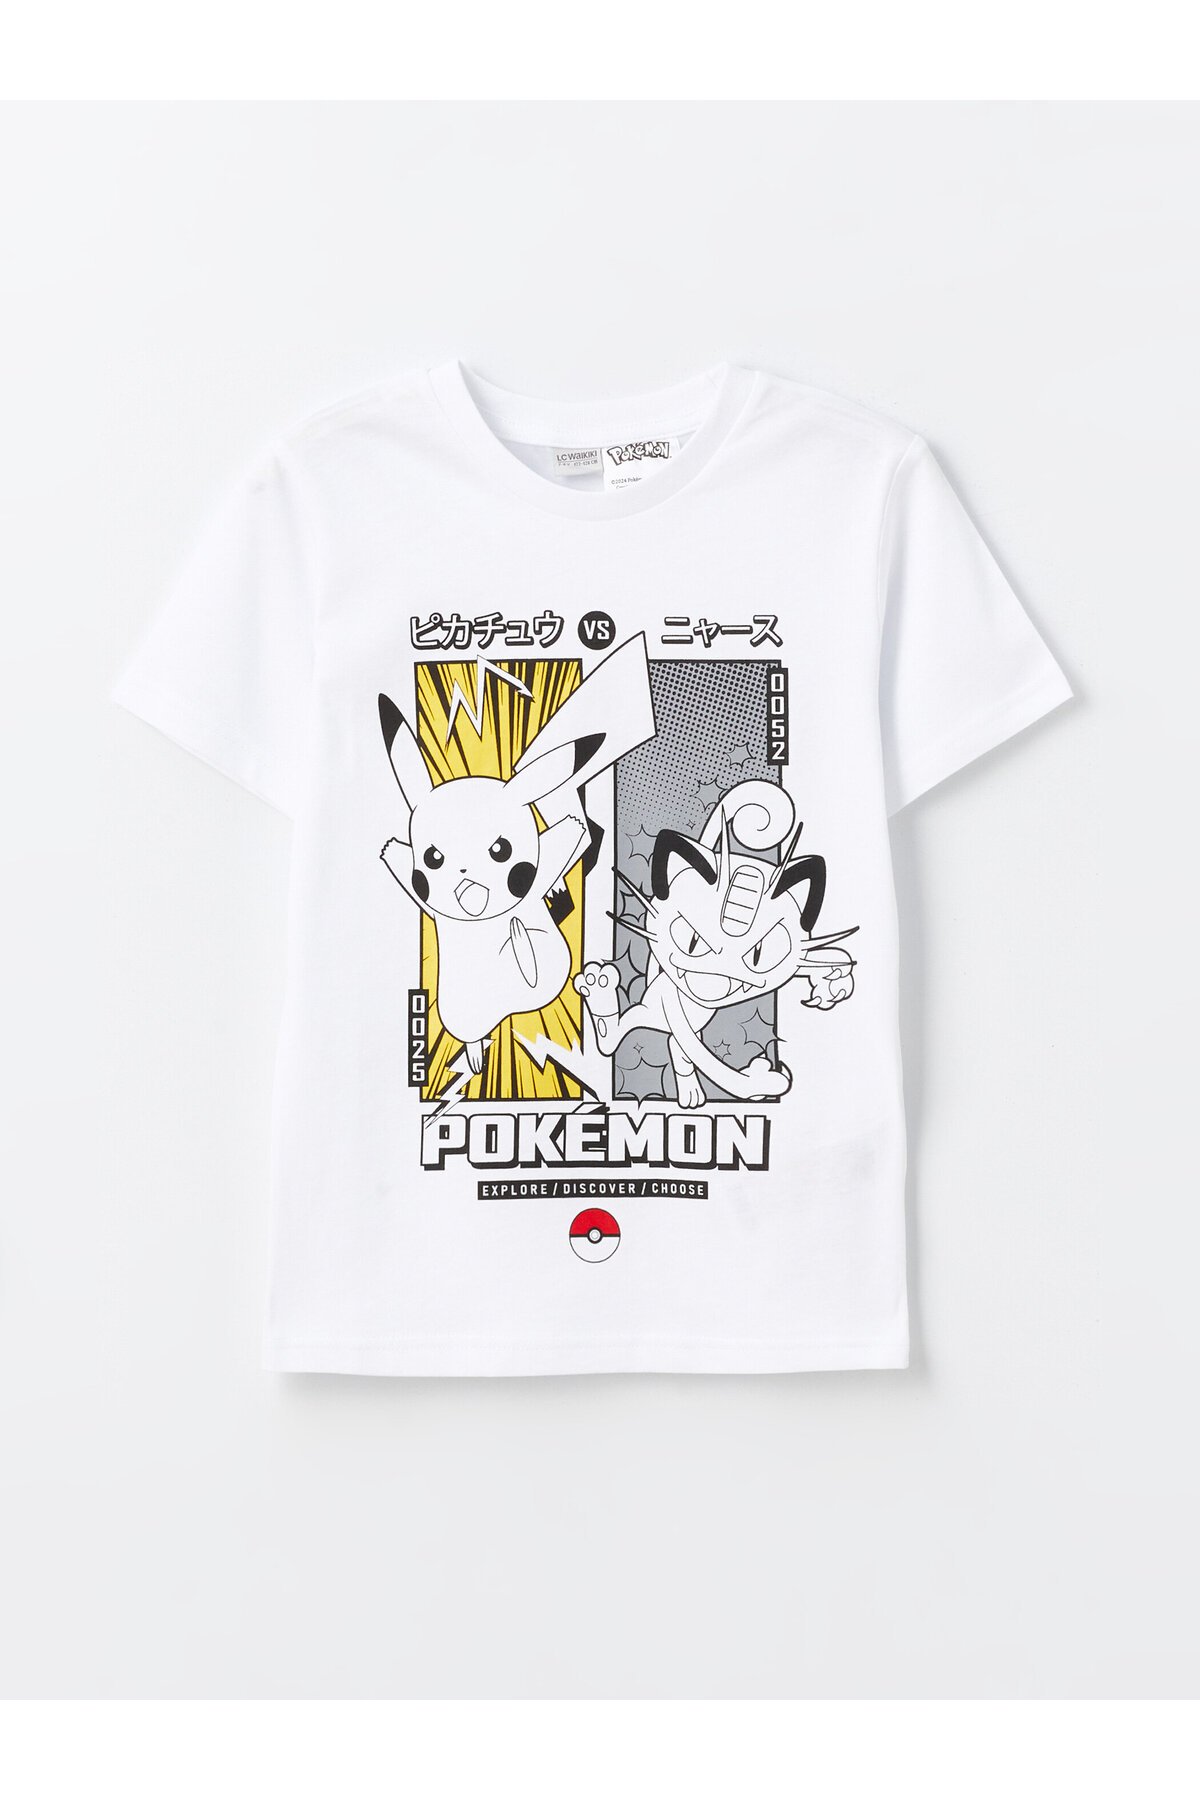 LC Waikiki Boys' Crew Neck Pikachu Printed Short Sleeve T-Shirt